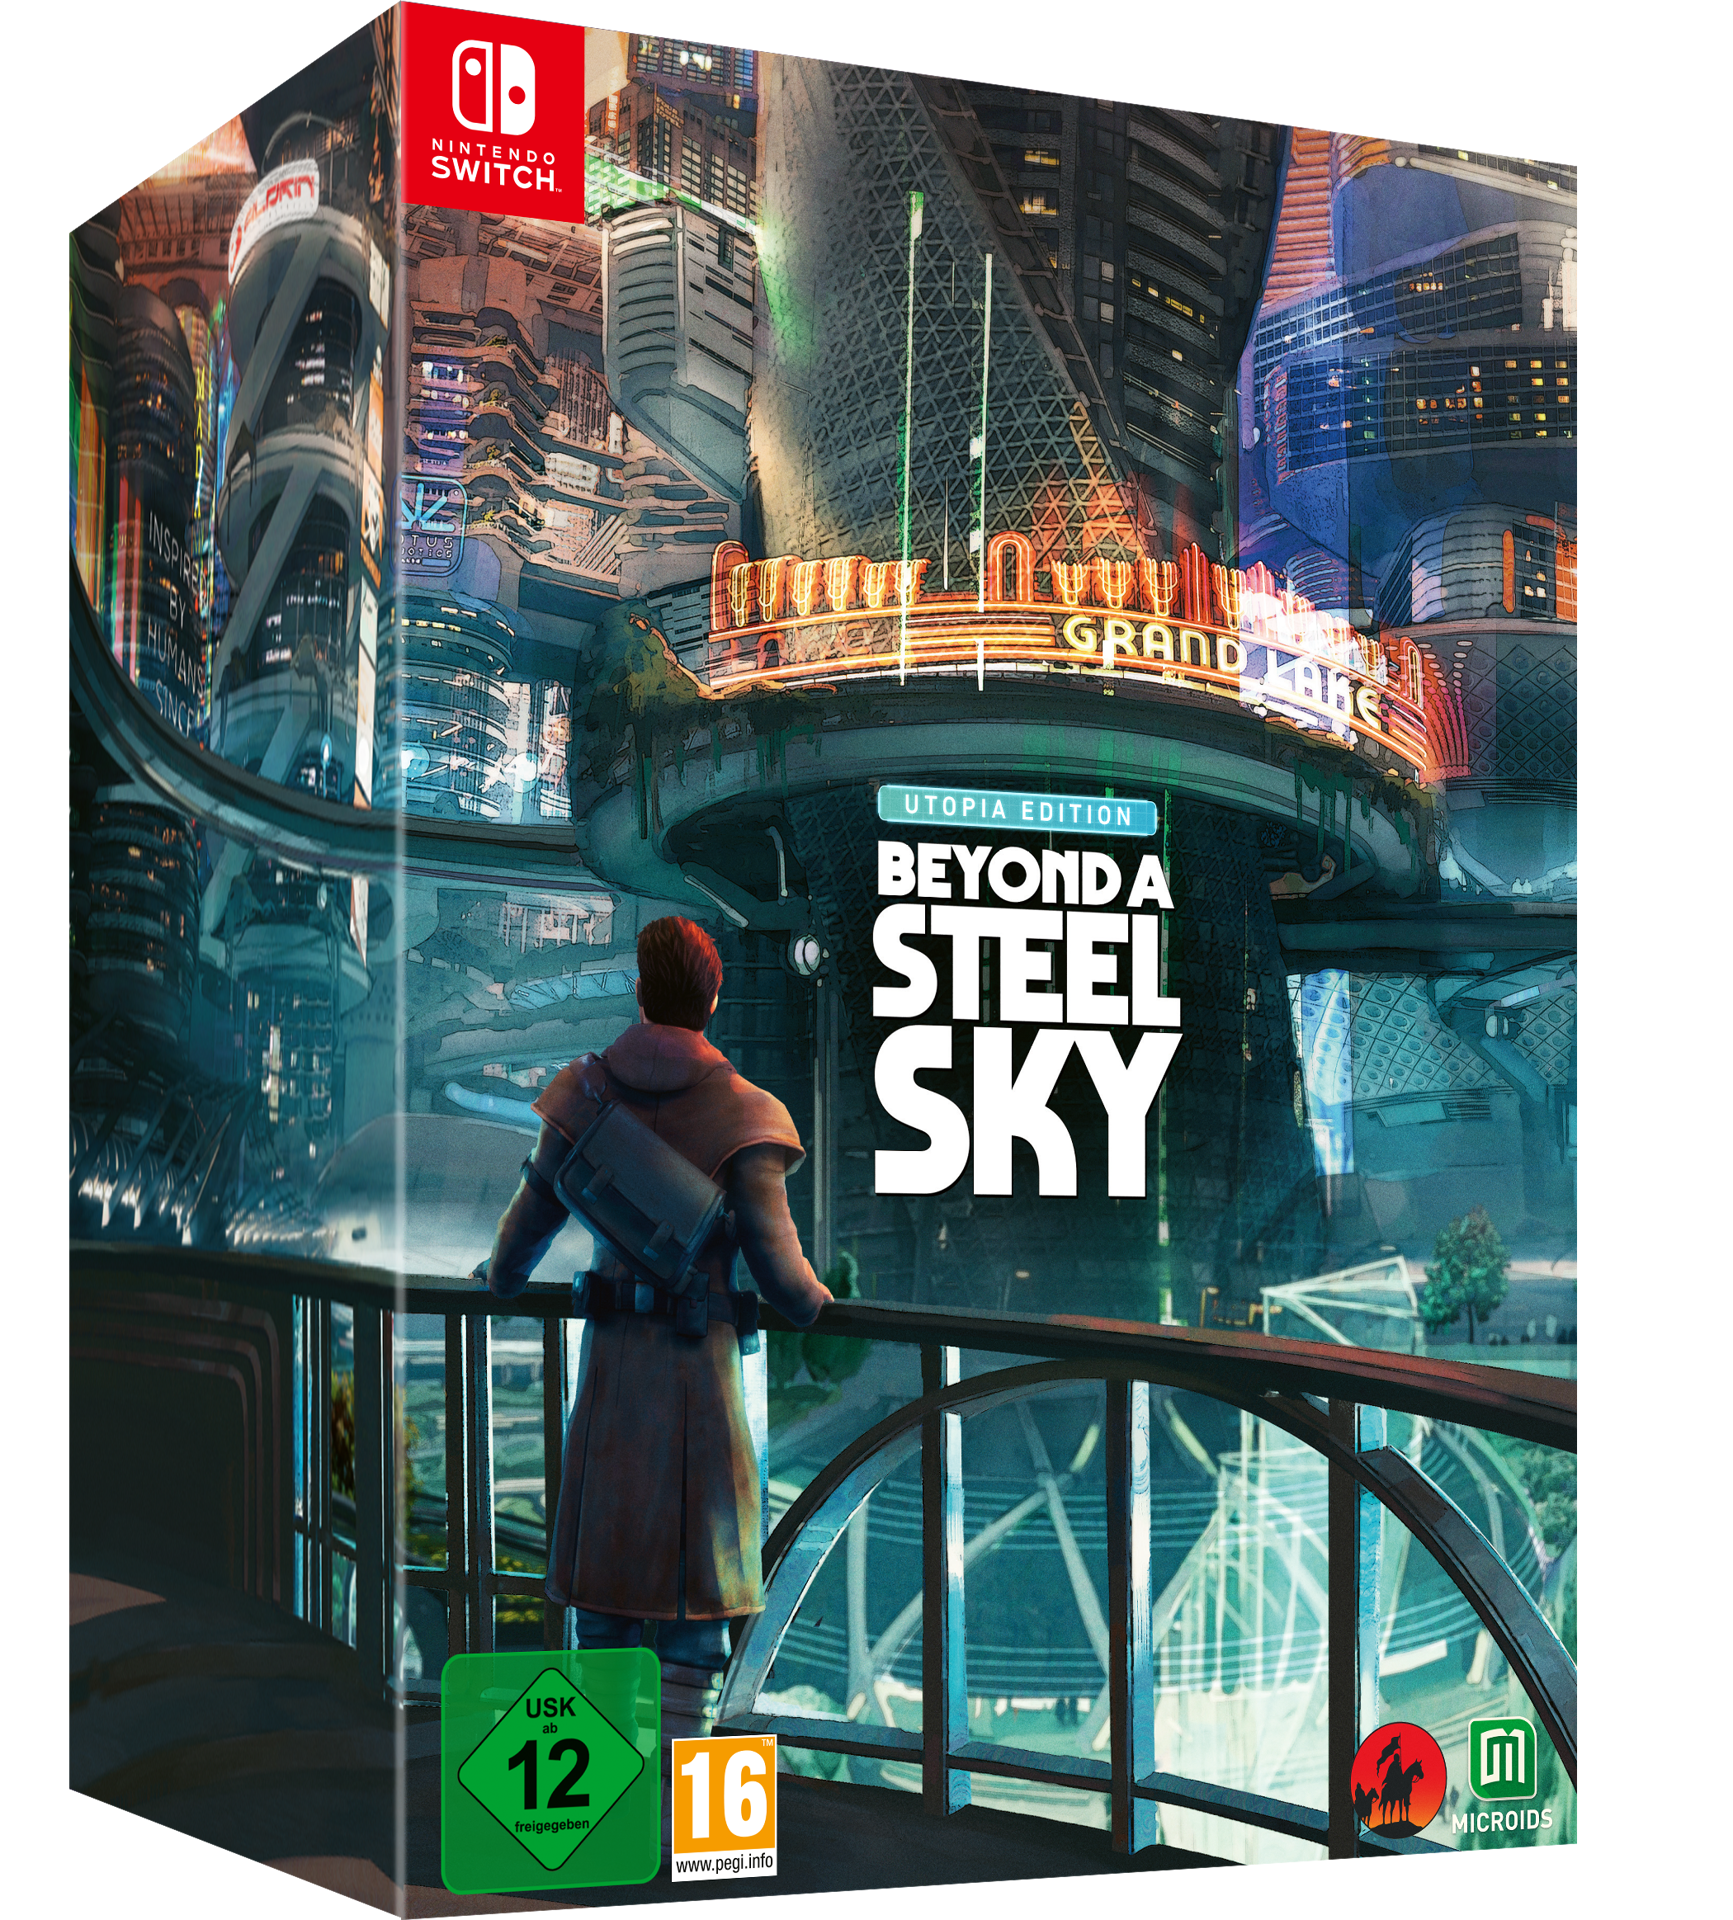 Beyond a Steel Sky - Utopia Edition